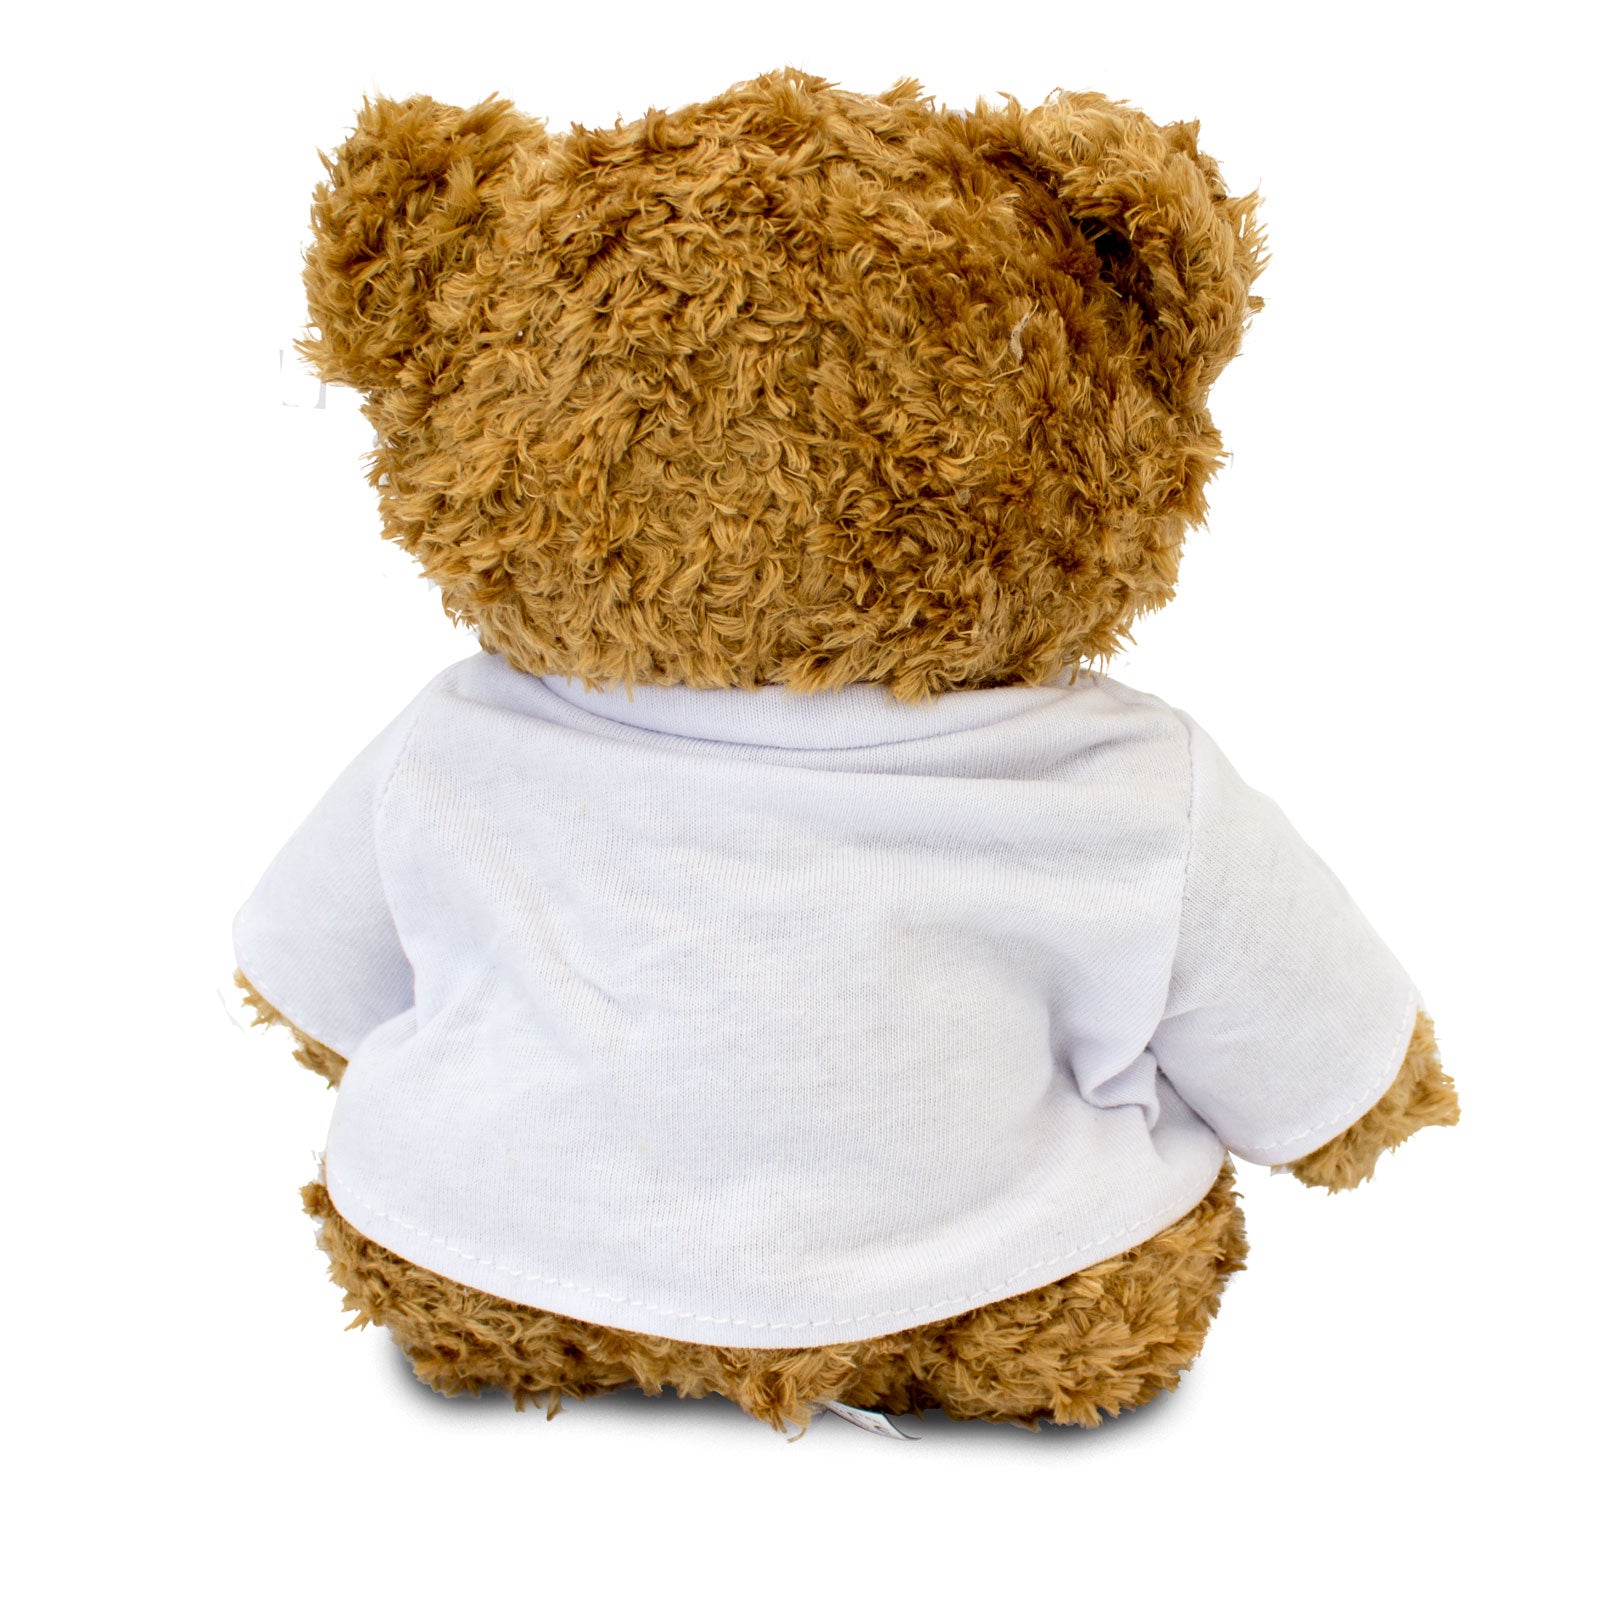 Get Well Soon Ferdinand - Teddy Bear